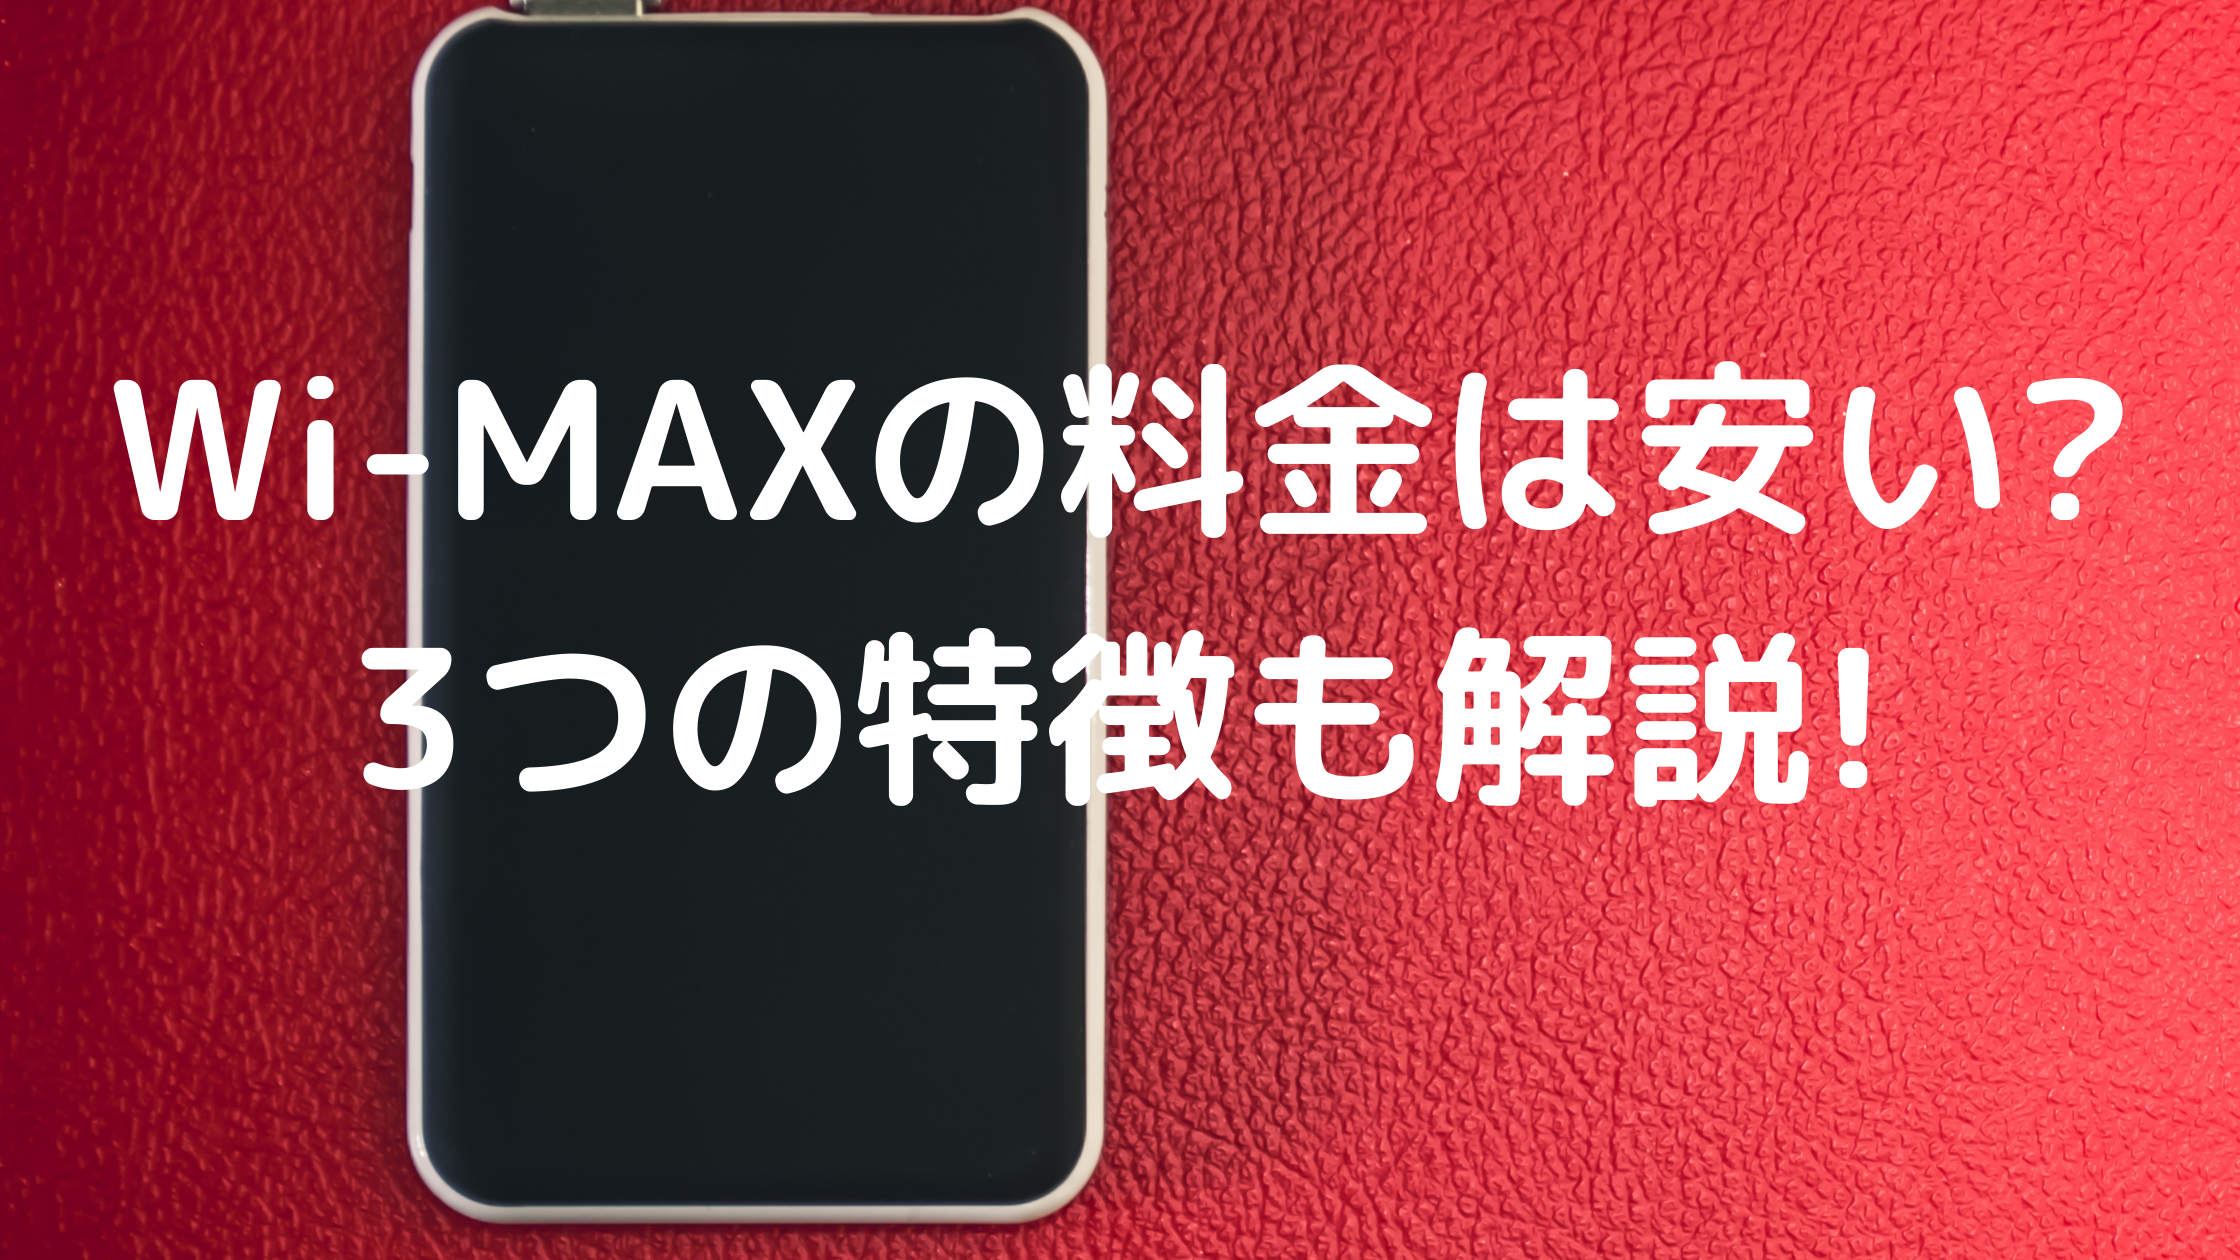 Wi-MAX料金の写真